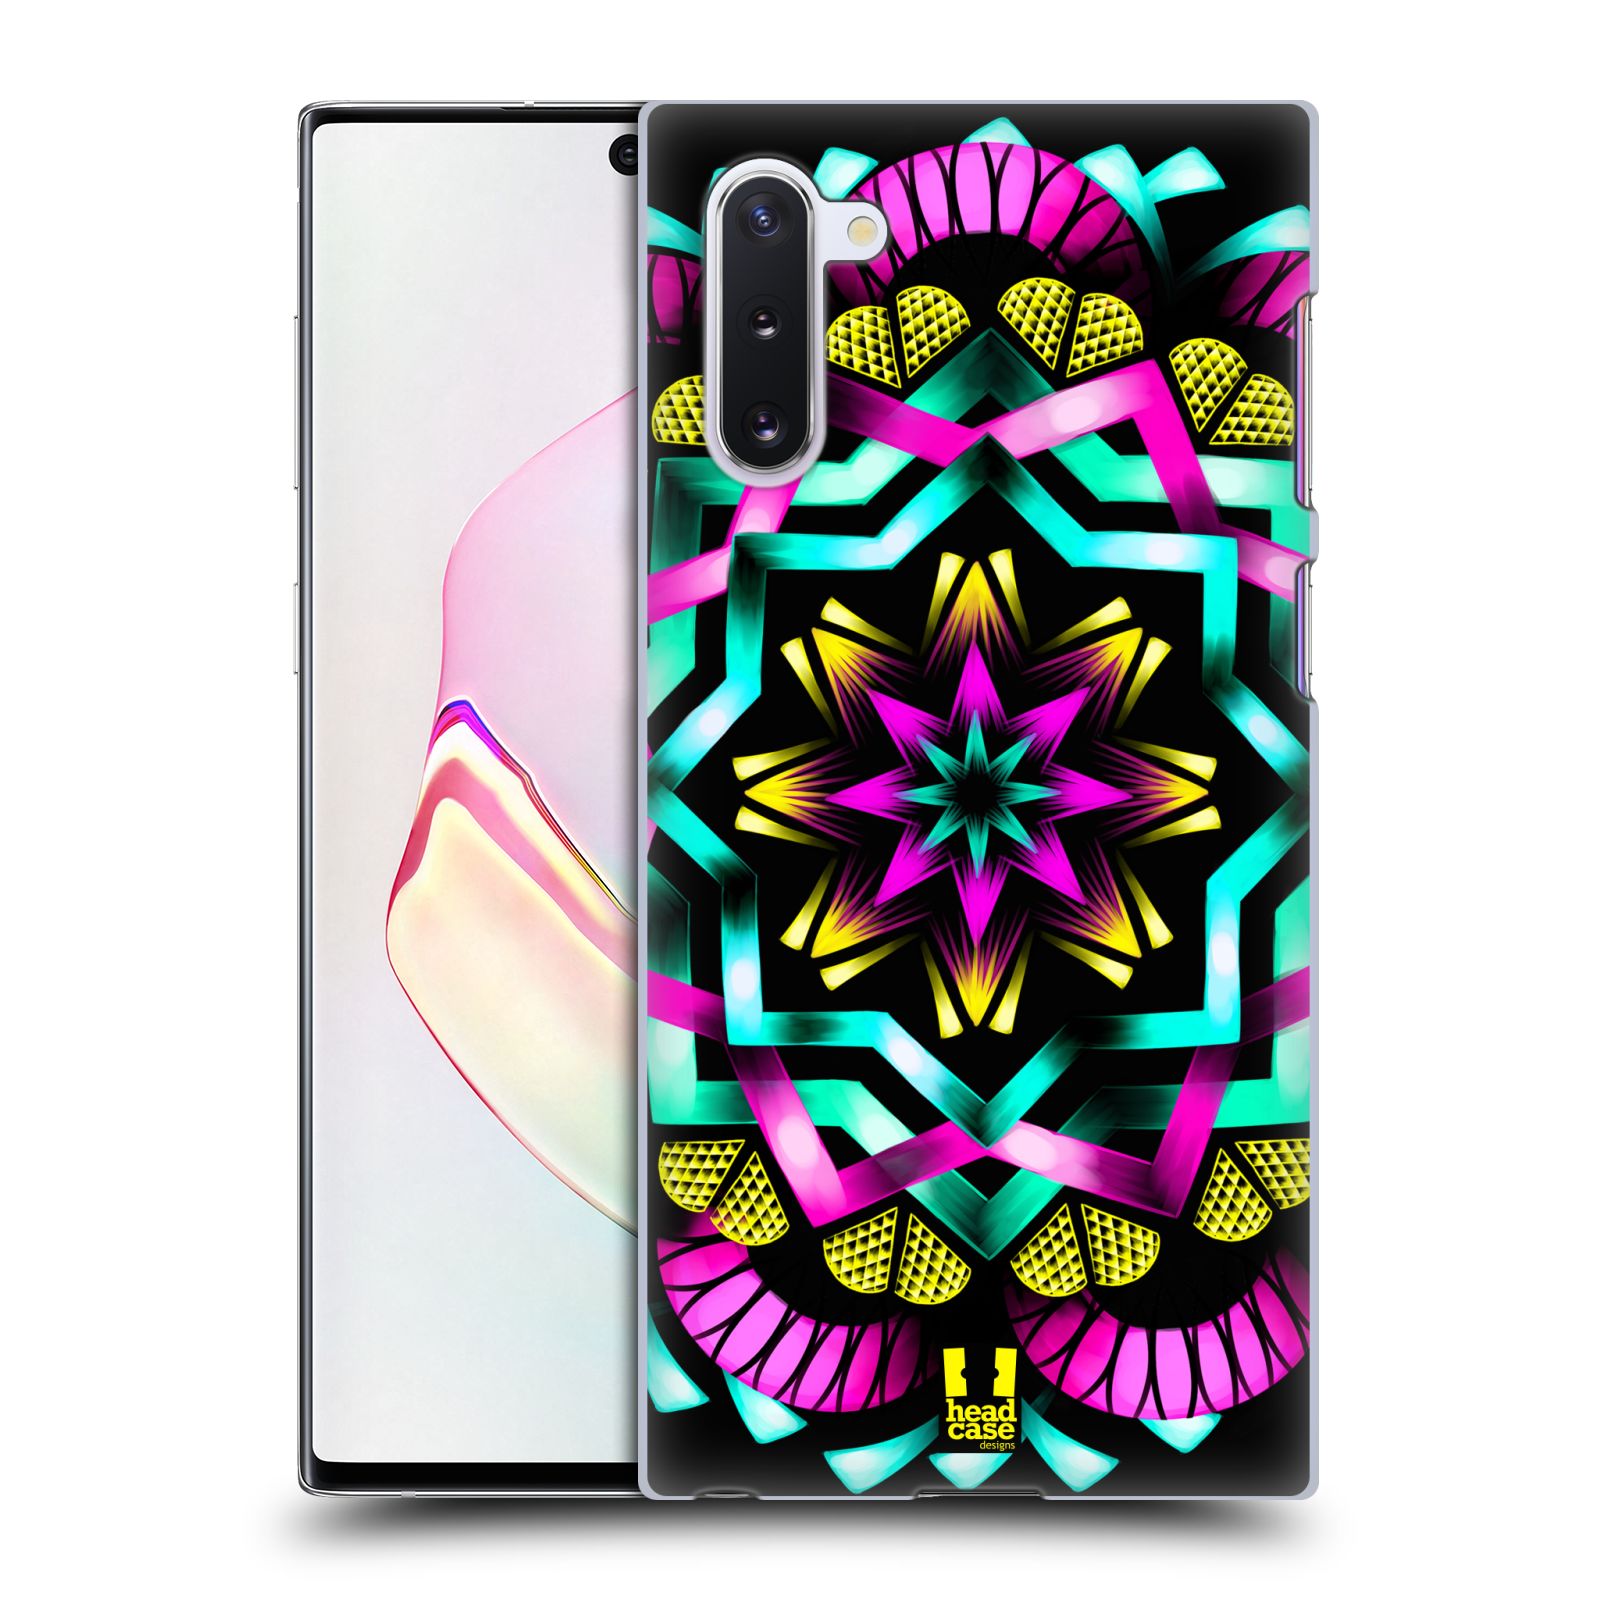 Pouzdro na mobil Samsung Galaxy Note 10 - HEAD CASE - vzor Indie Mandala kaleidoskop barevný vzor SLUNCE